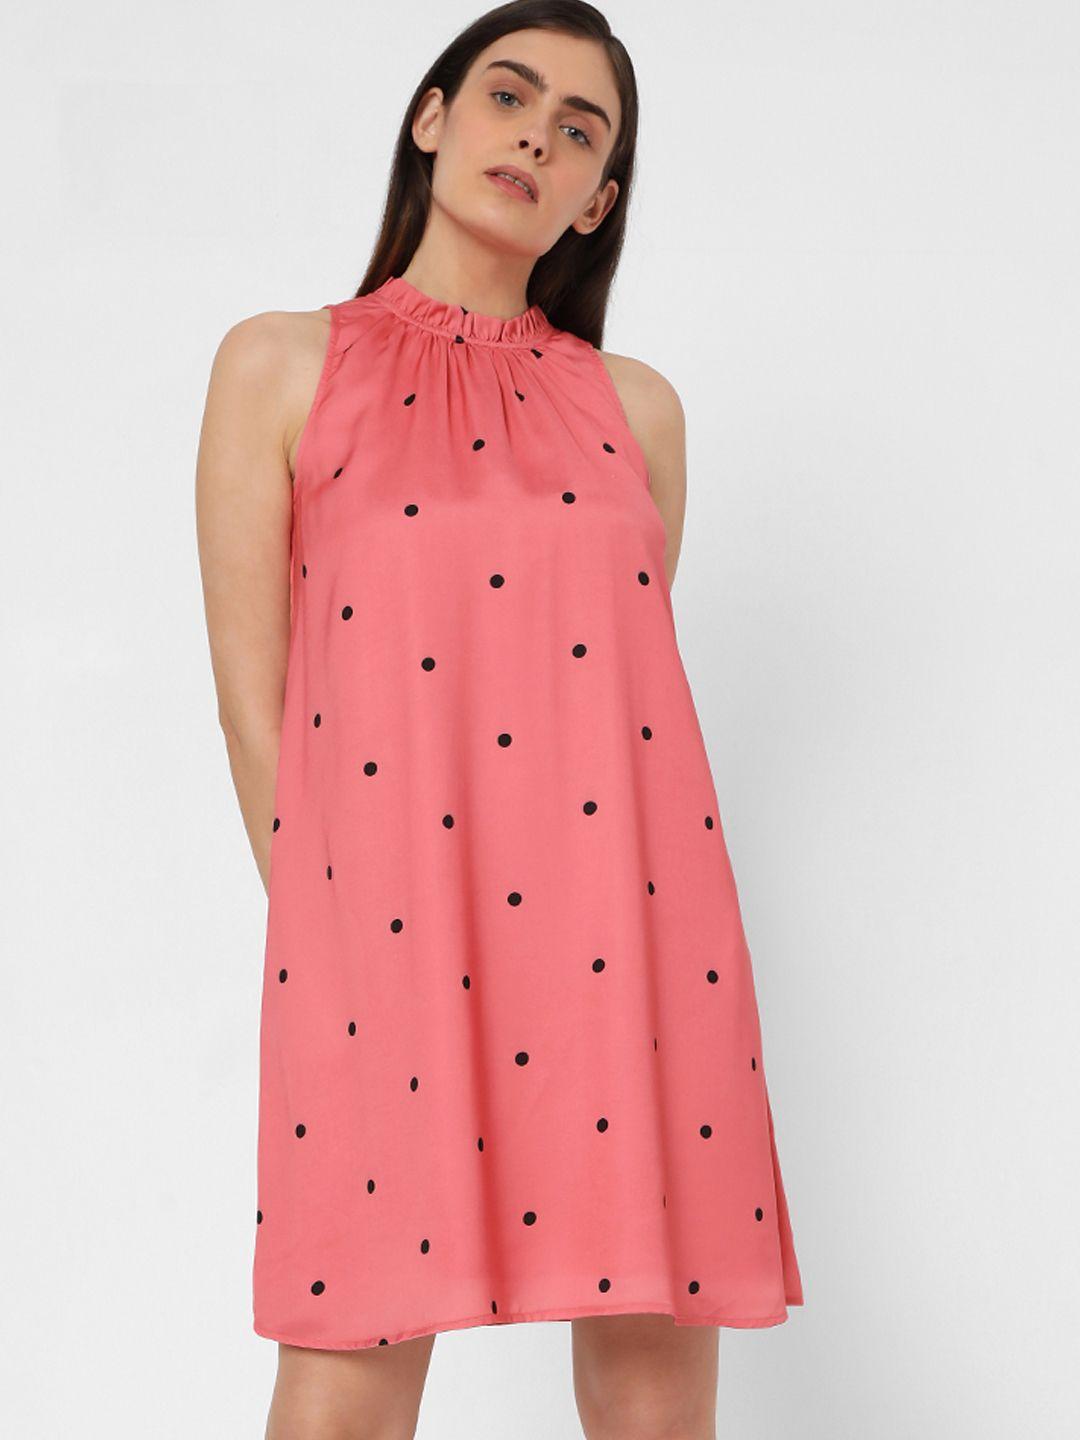 vero moda pink & black polka dots printed a-line dress